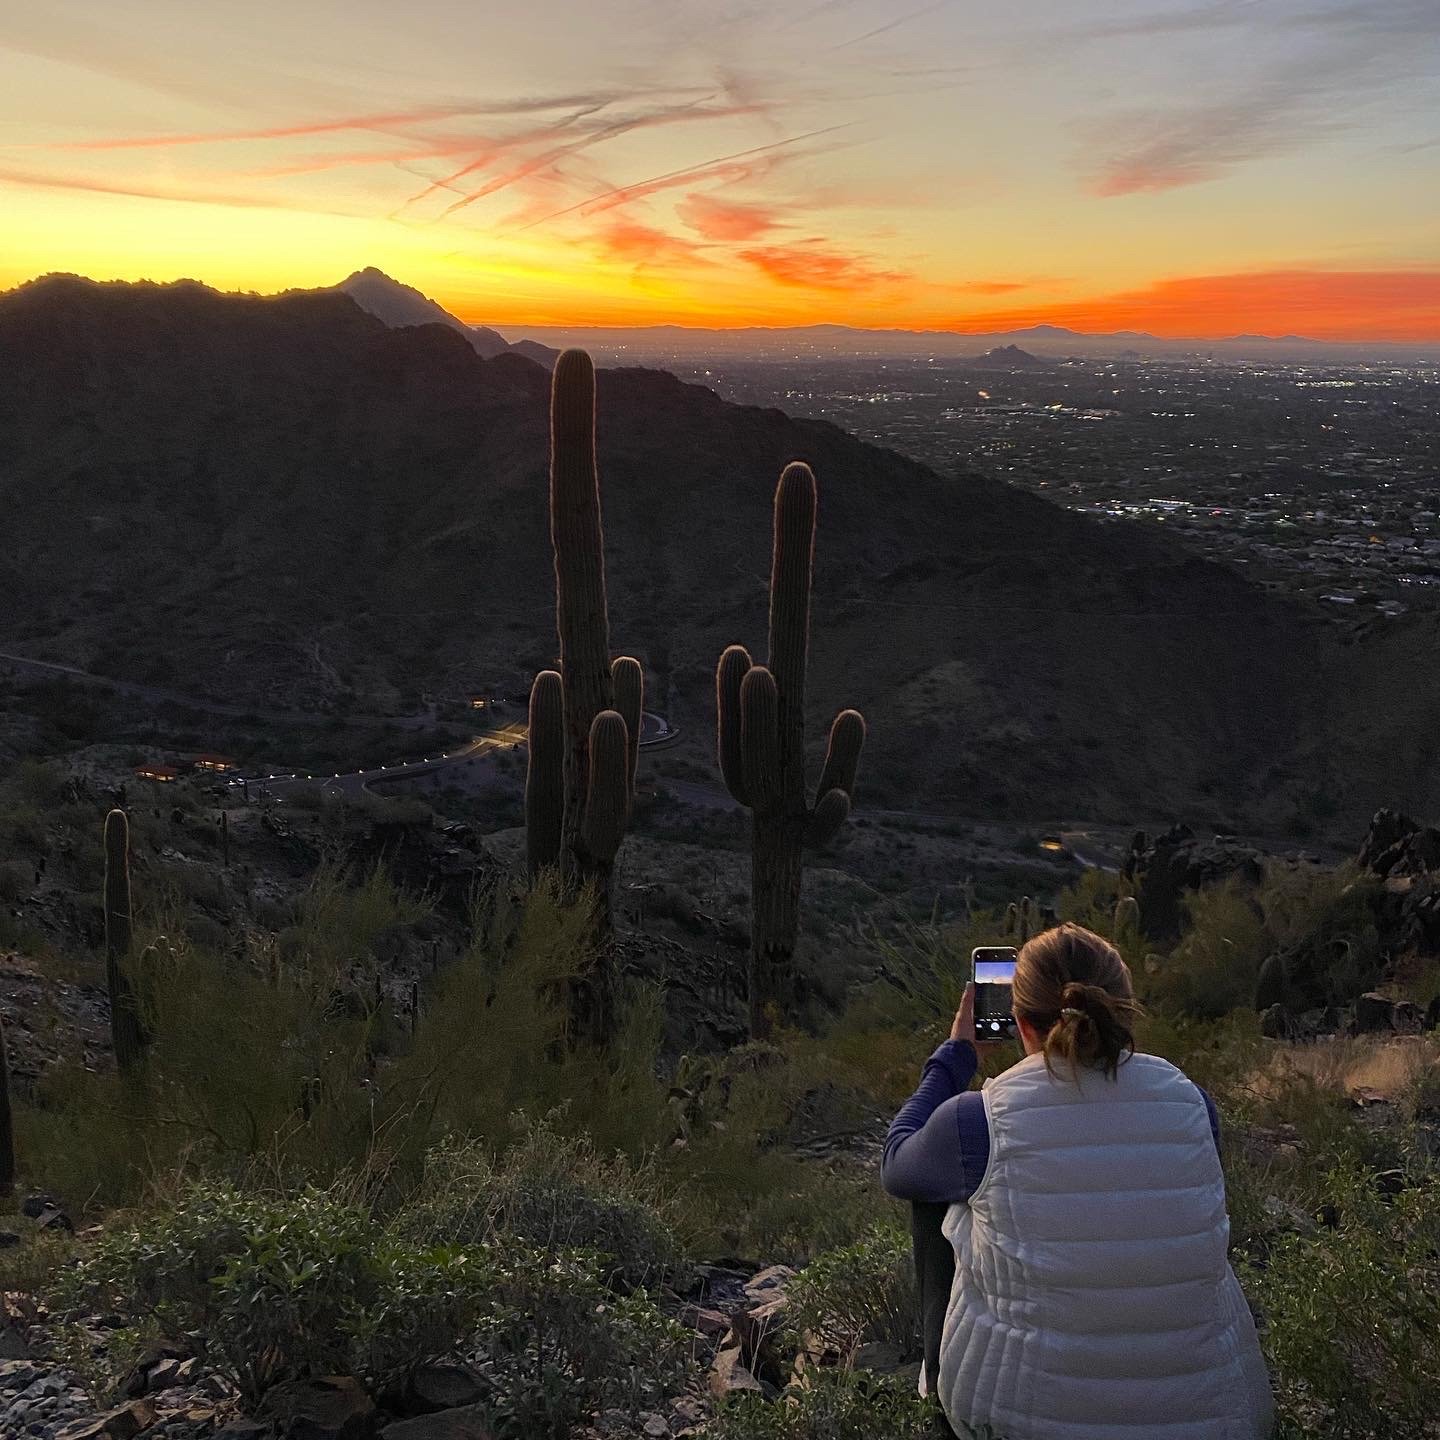 Arizona_Piestewa Peak sunrise hike 1.JPG